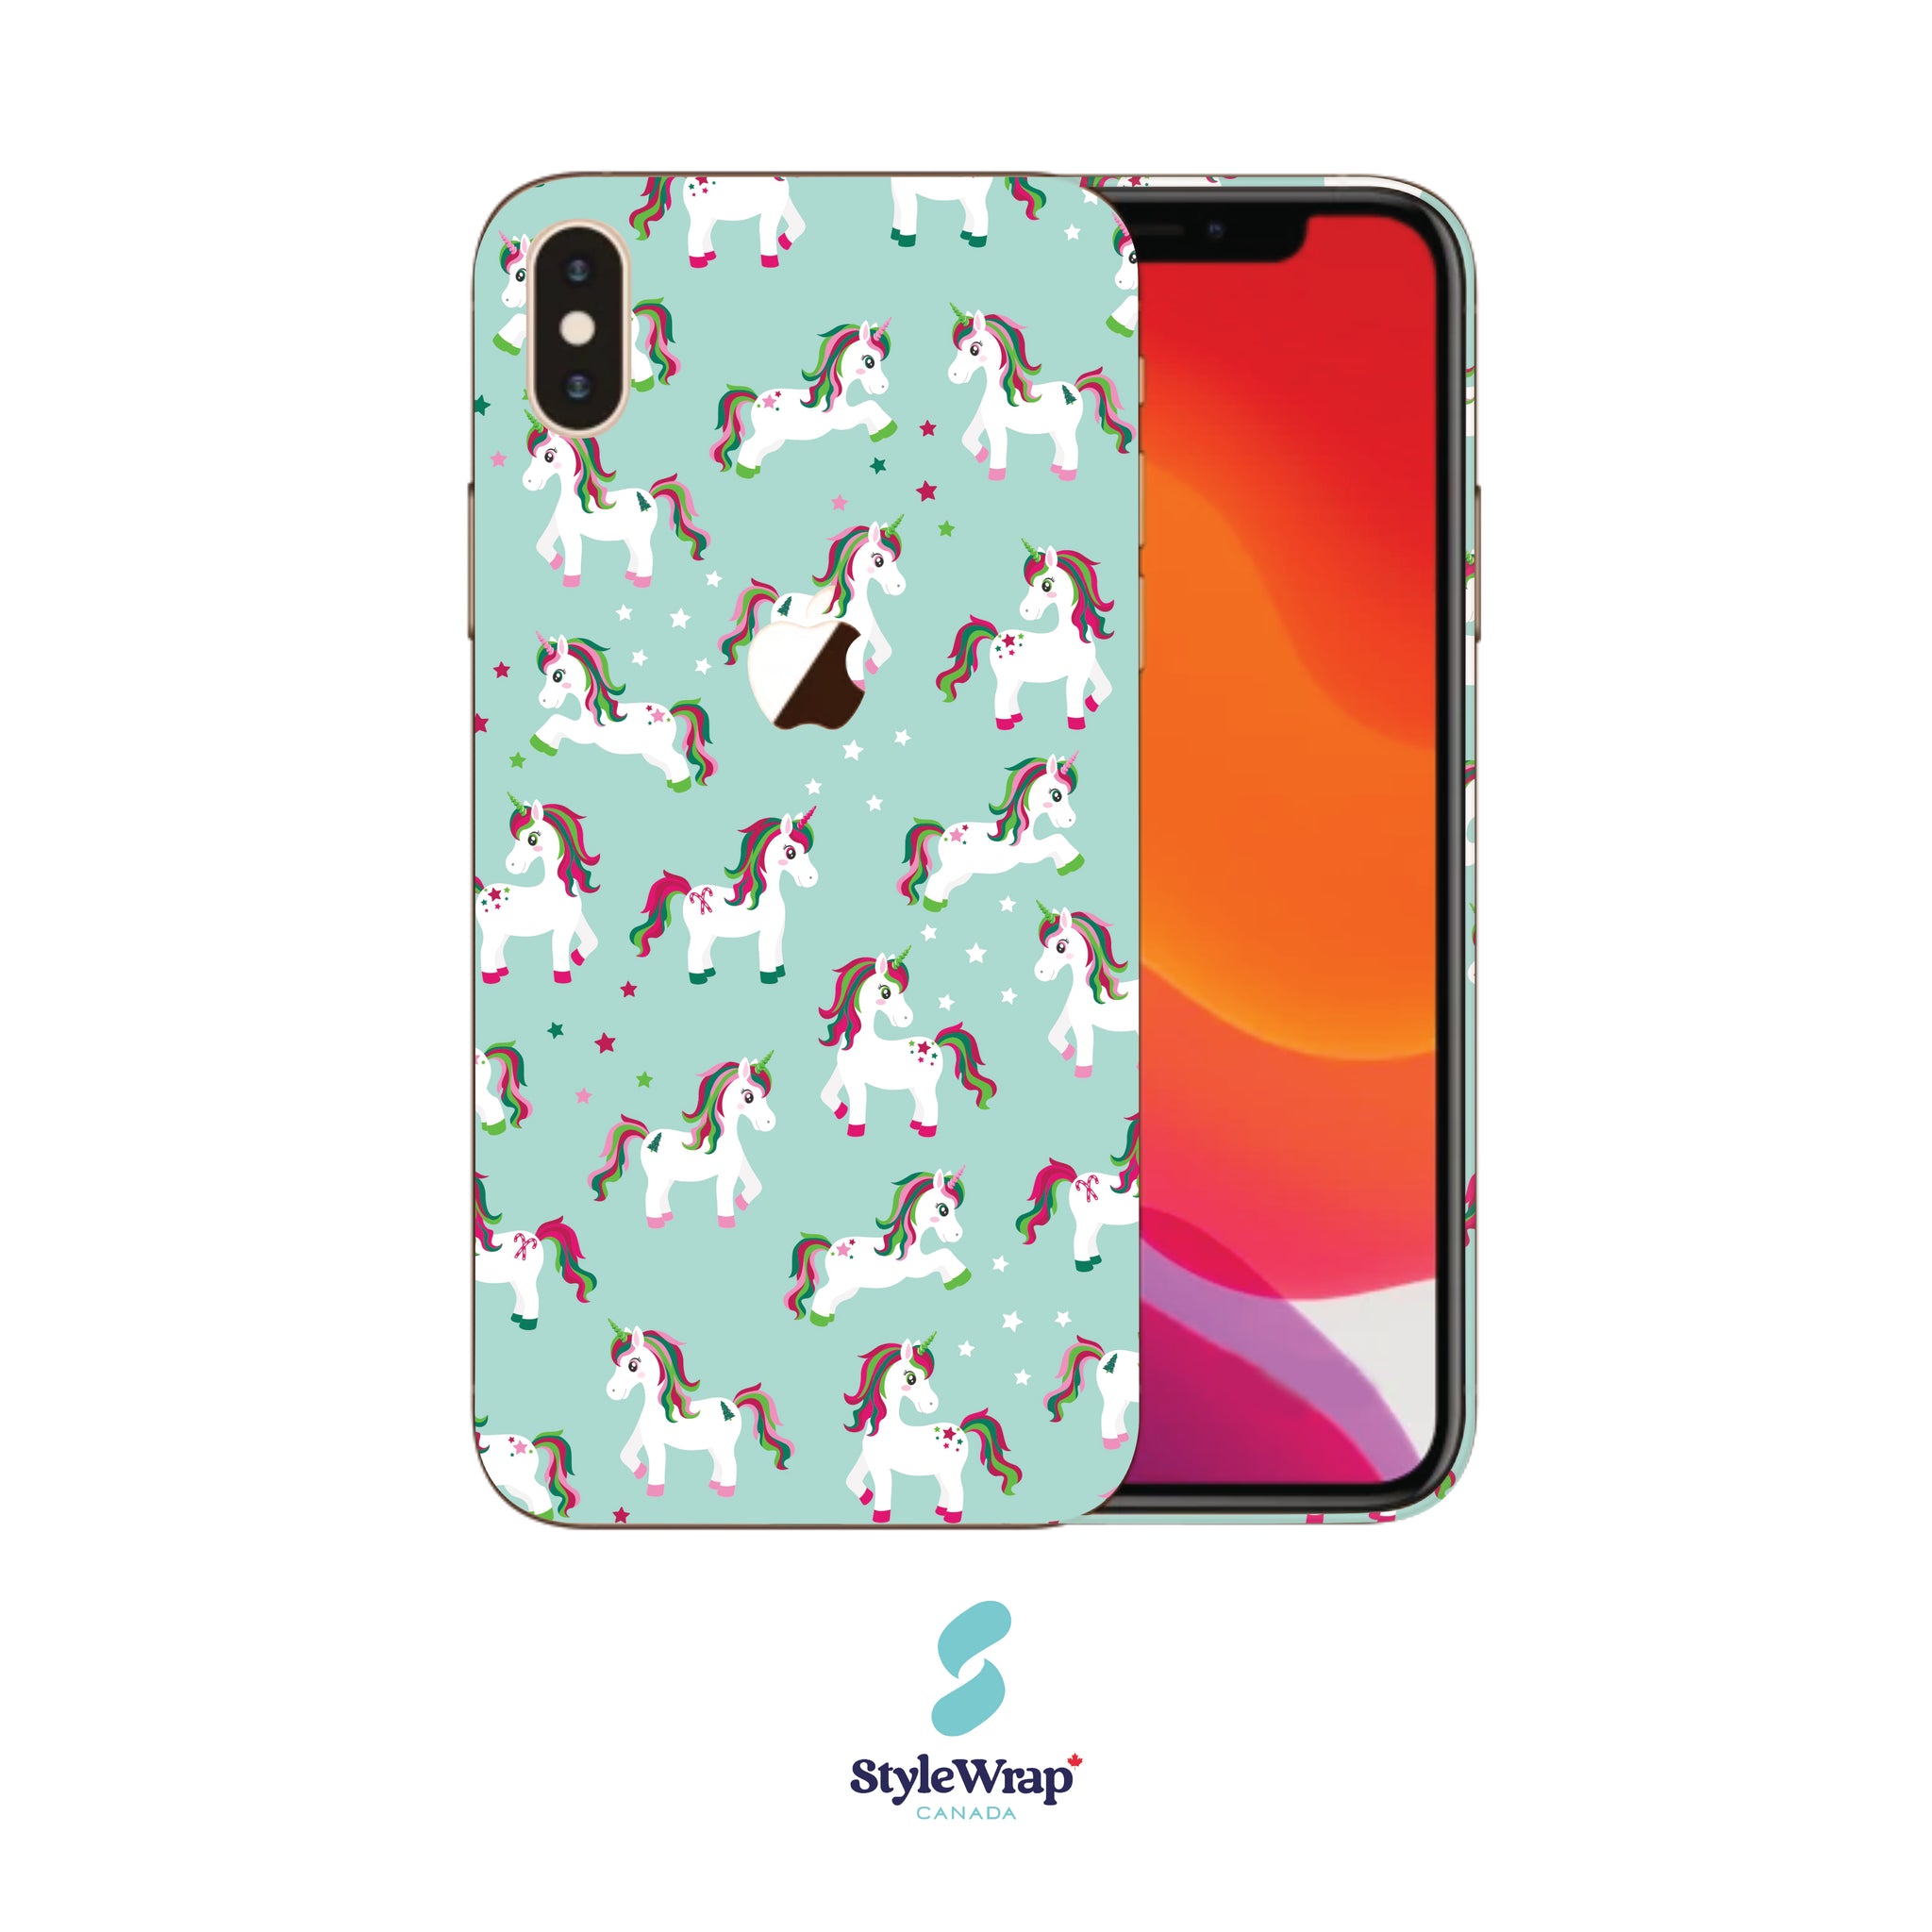 iPhone - Unicorn